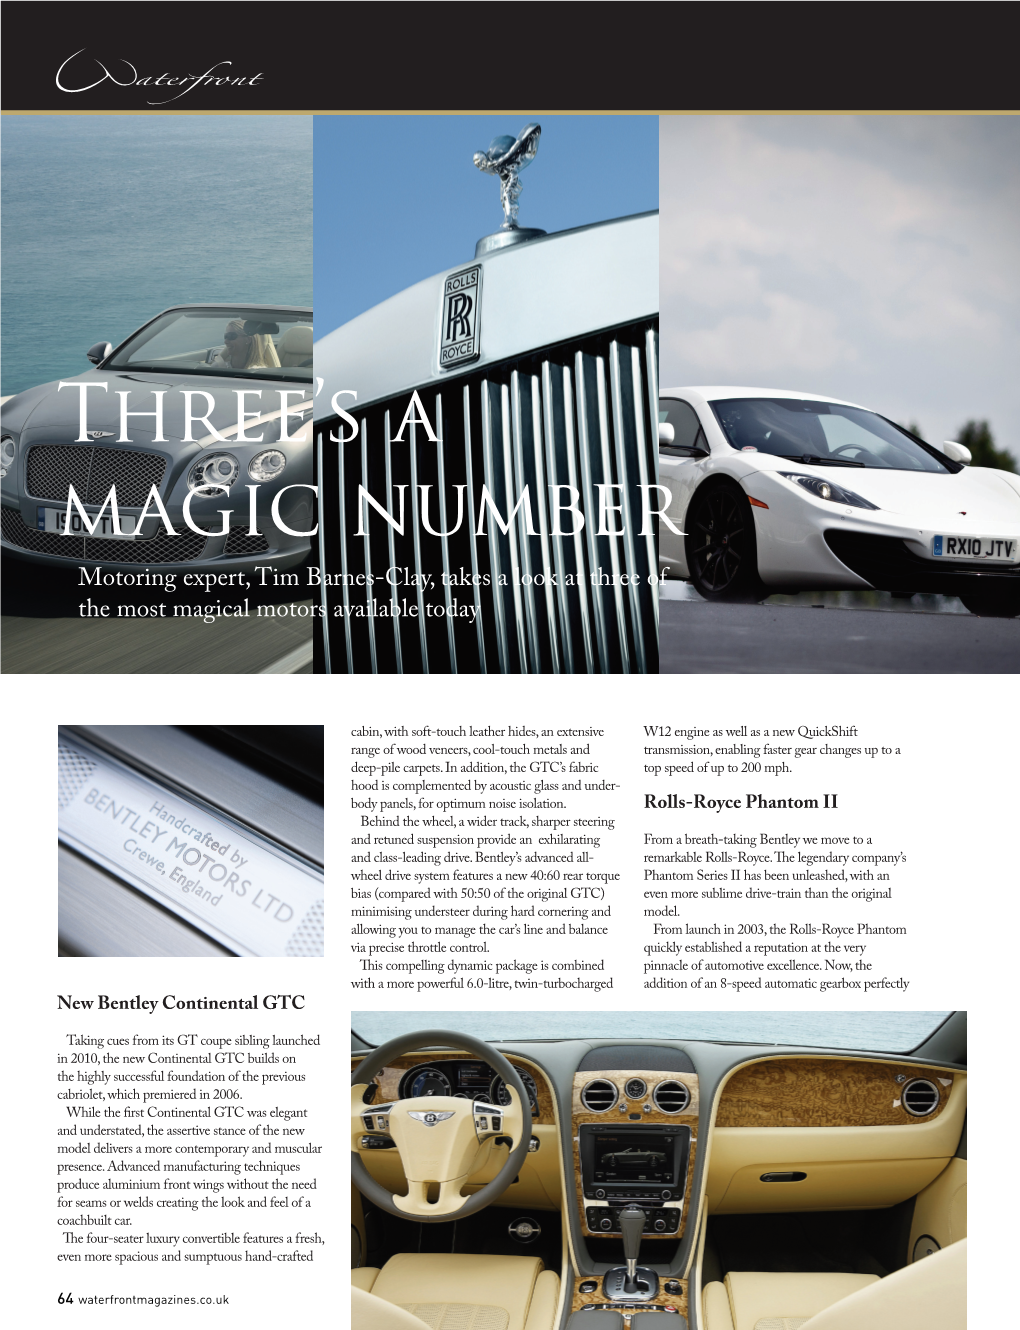 Three's a Magic Number (Rolls Royce Phantom II, New Bentley